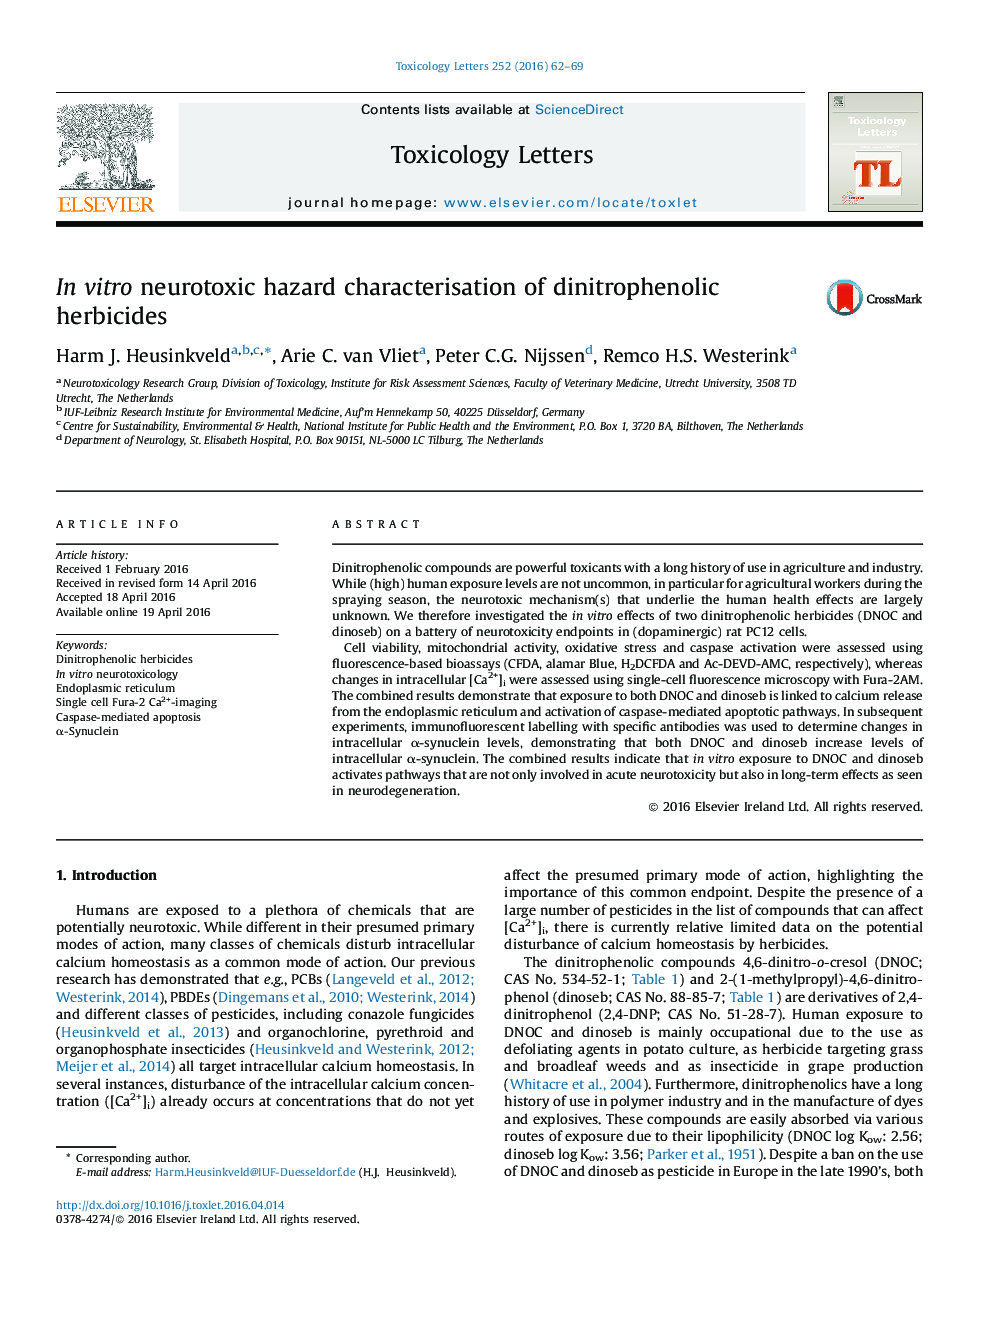 In vitro neurotoxic hazard characterisation of dinitrophenolic herbicides